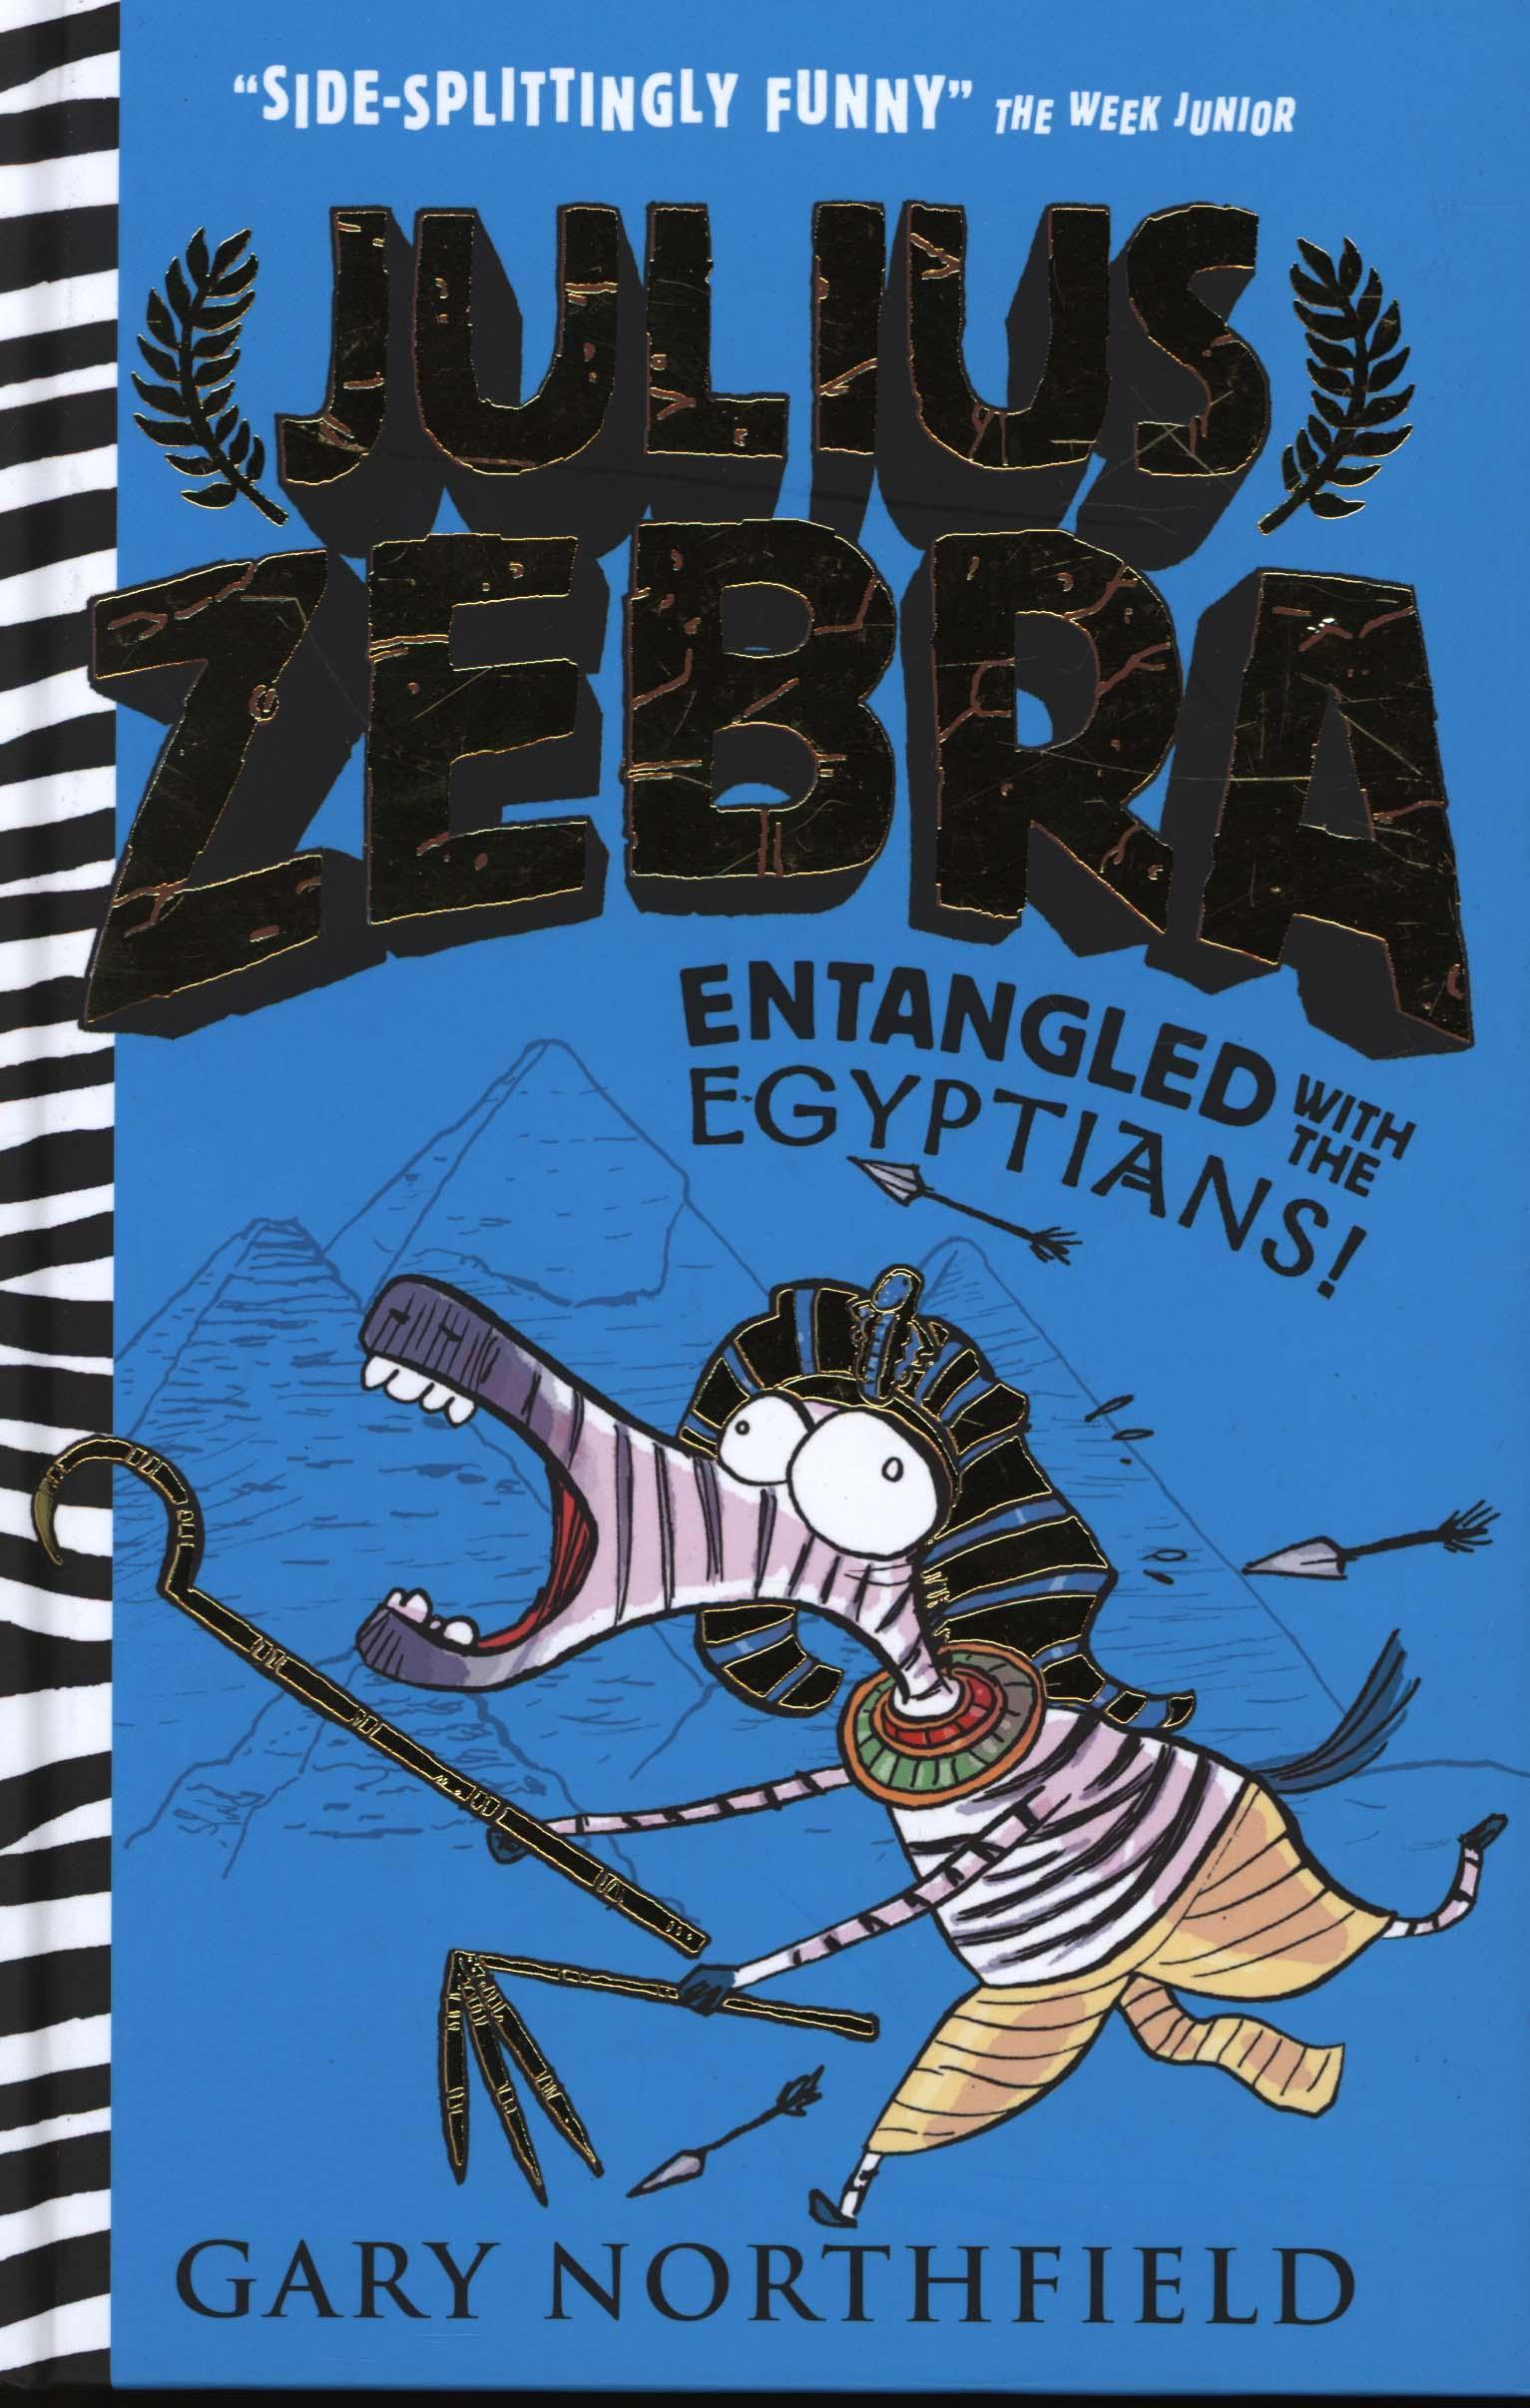 Julius Zebra: Entangled with the Egyptians!